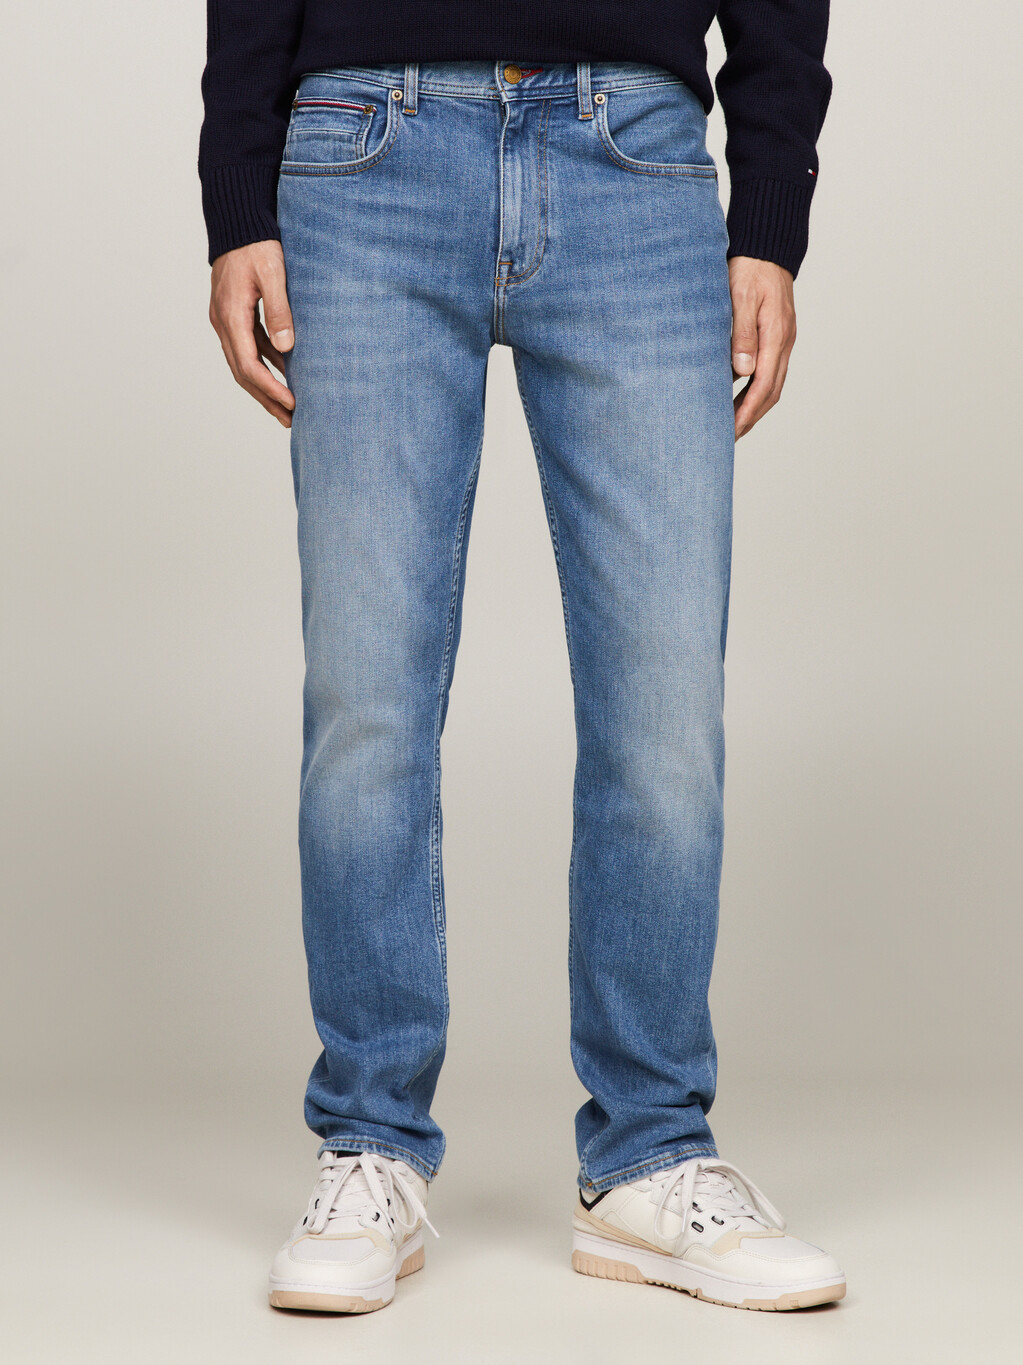 TH Flex Mercer Regular Straight Jeans, Boston Indigo, hi-res